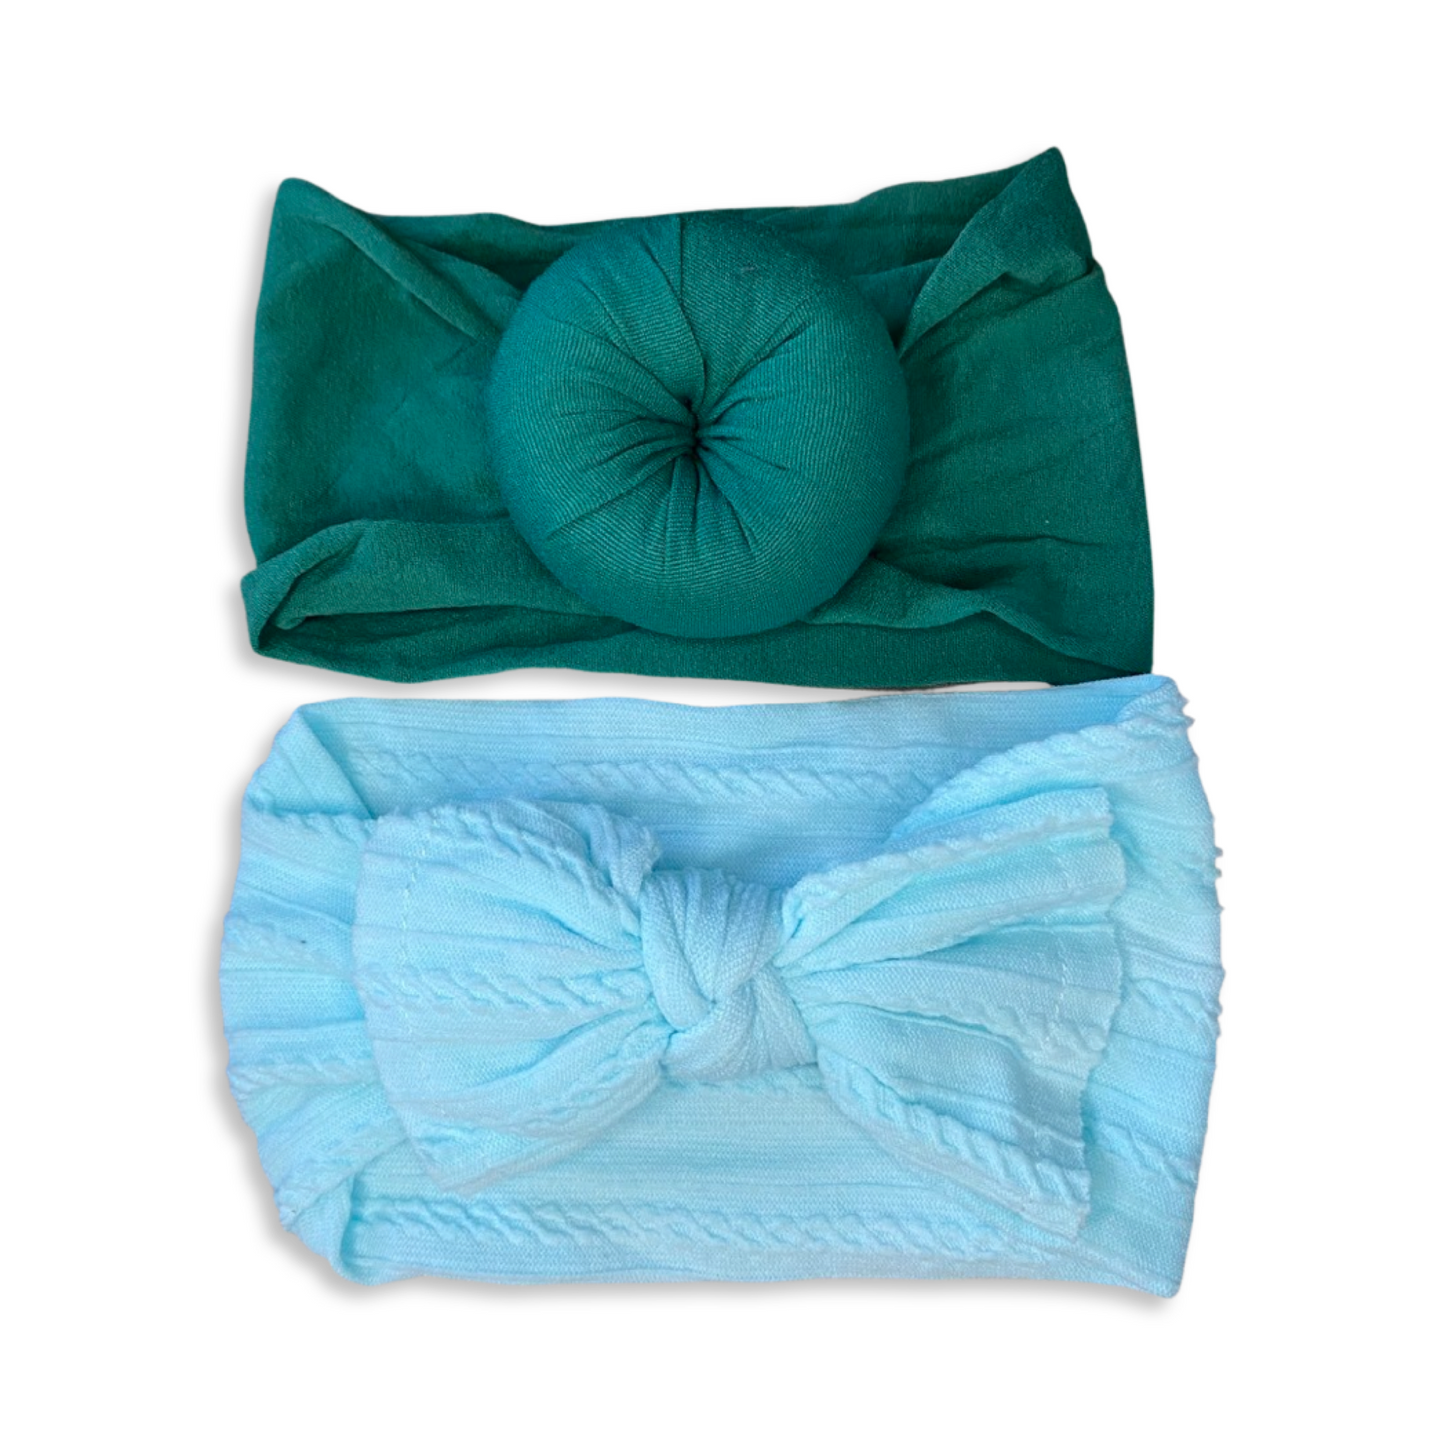 Girls' green & blue themed baby gift pack